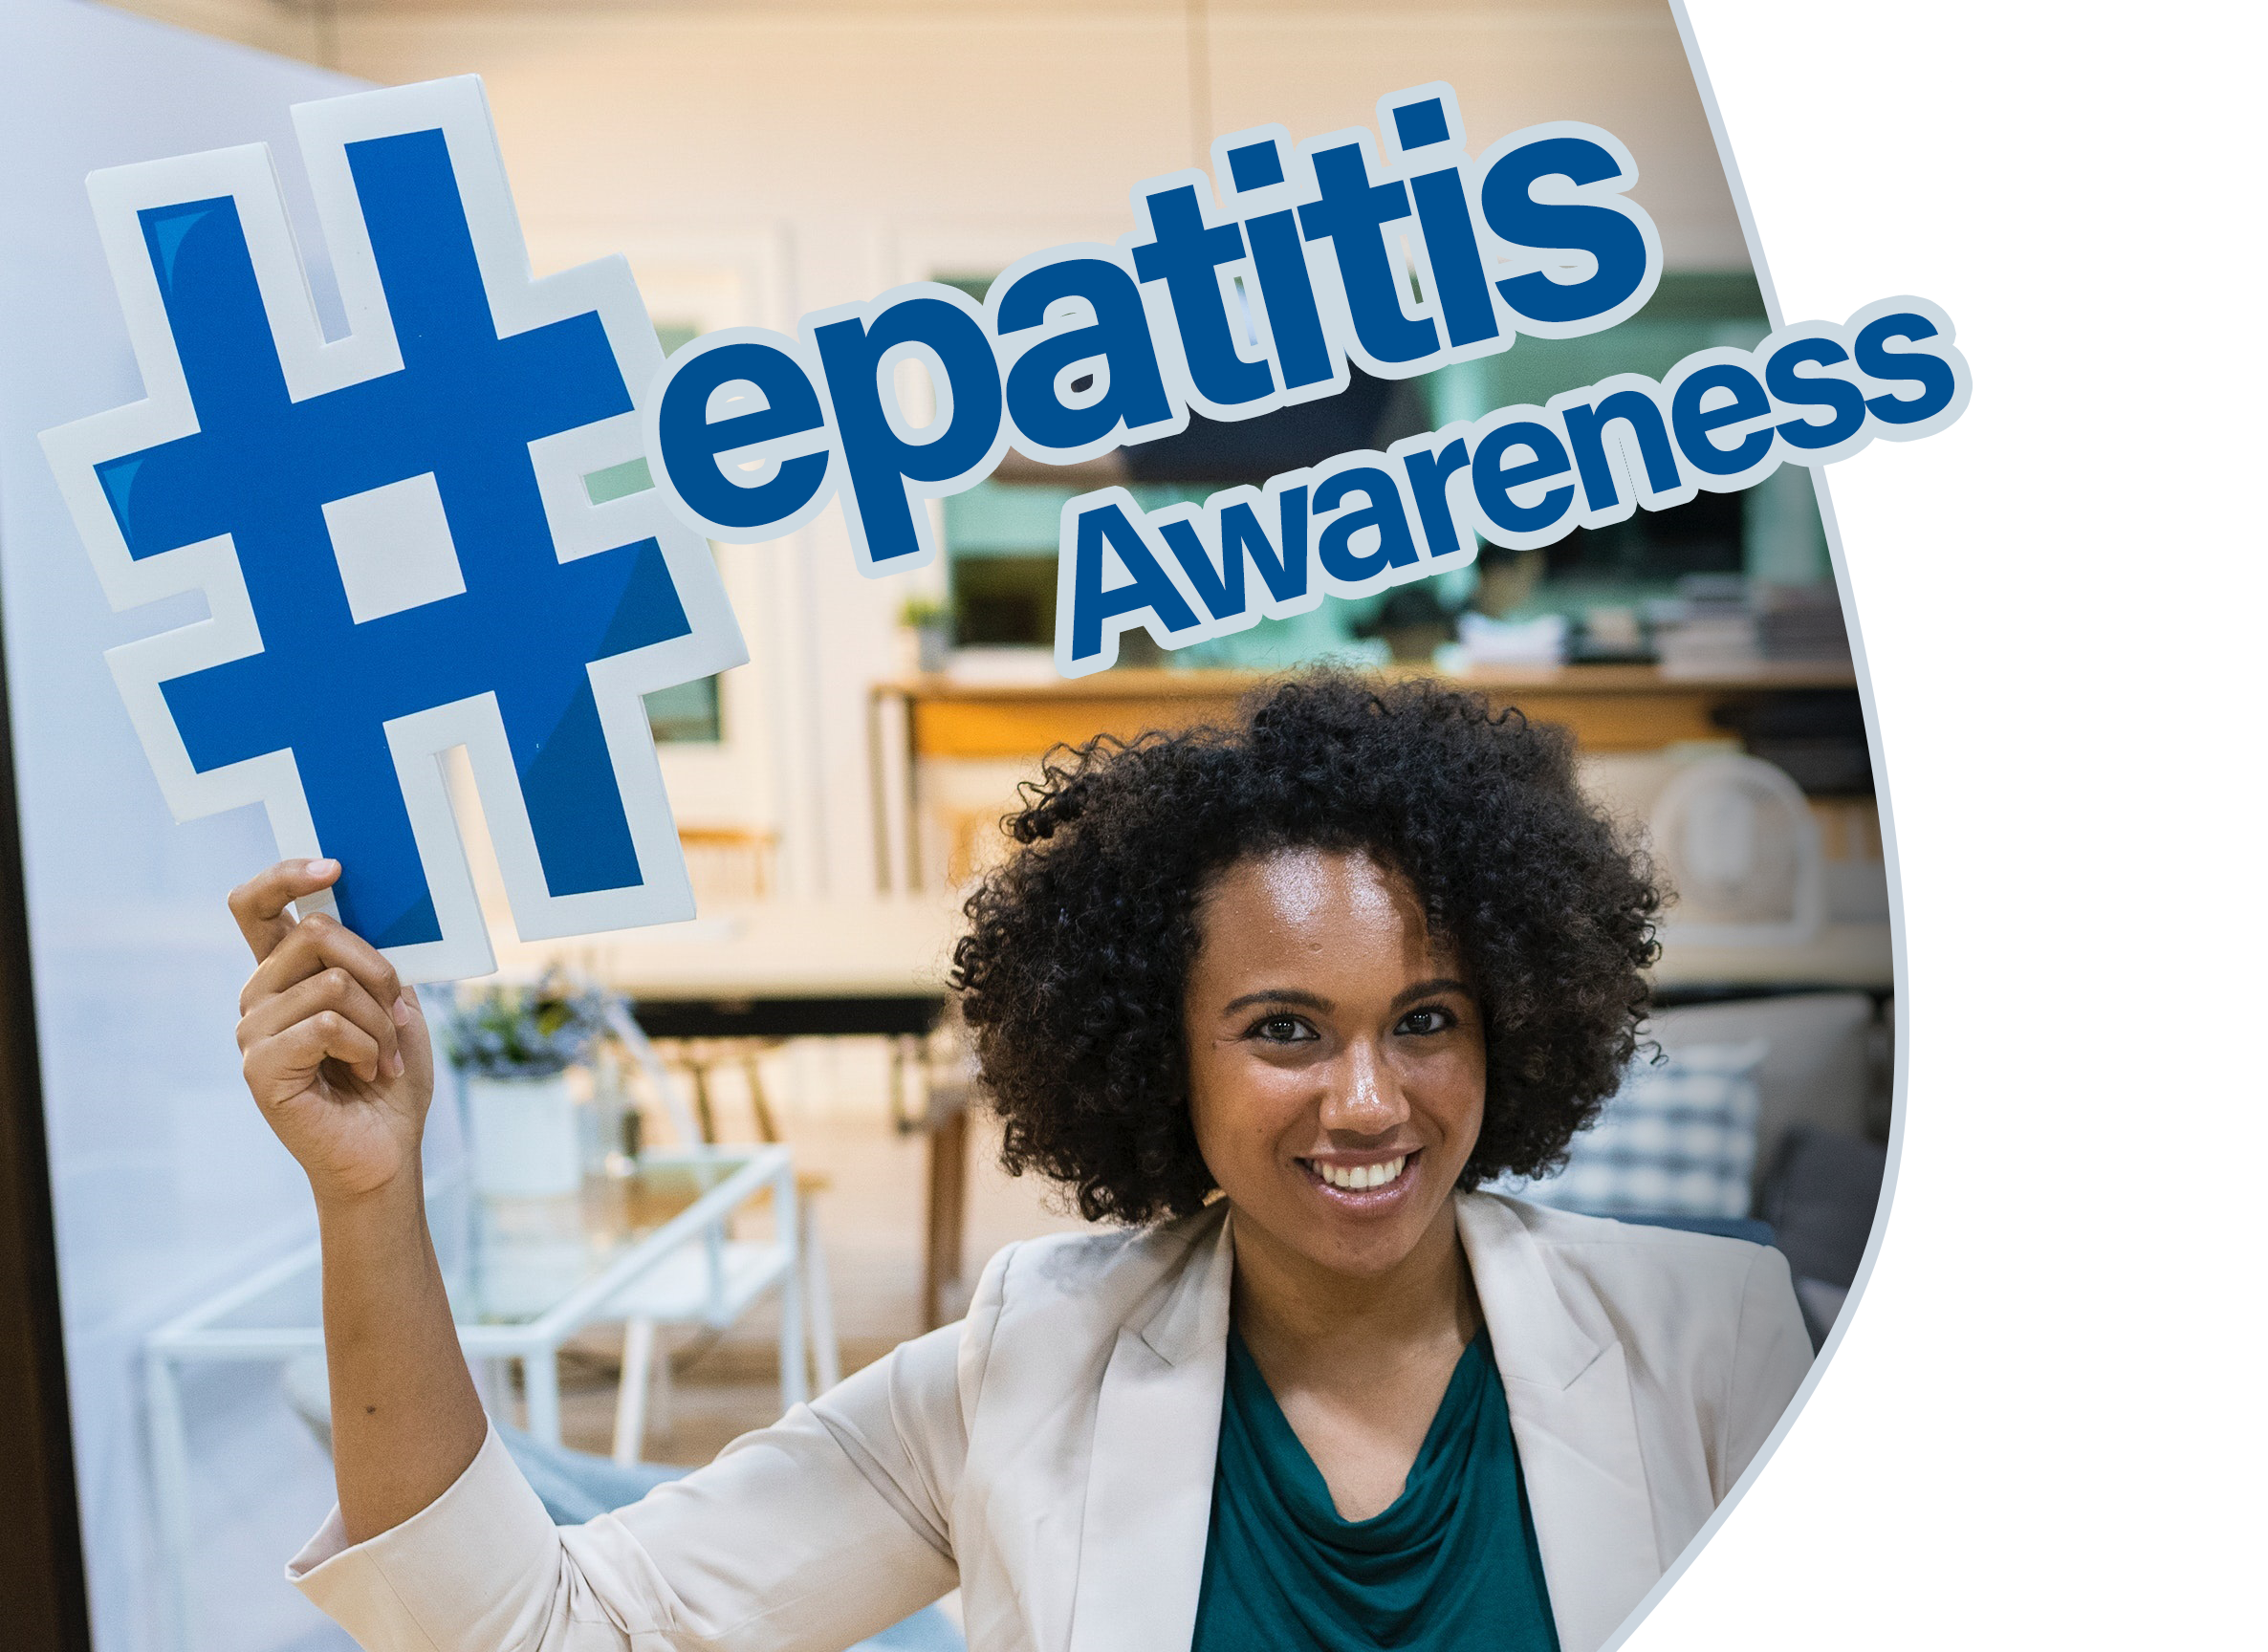 World Hepatitis Day 2019